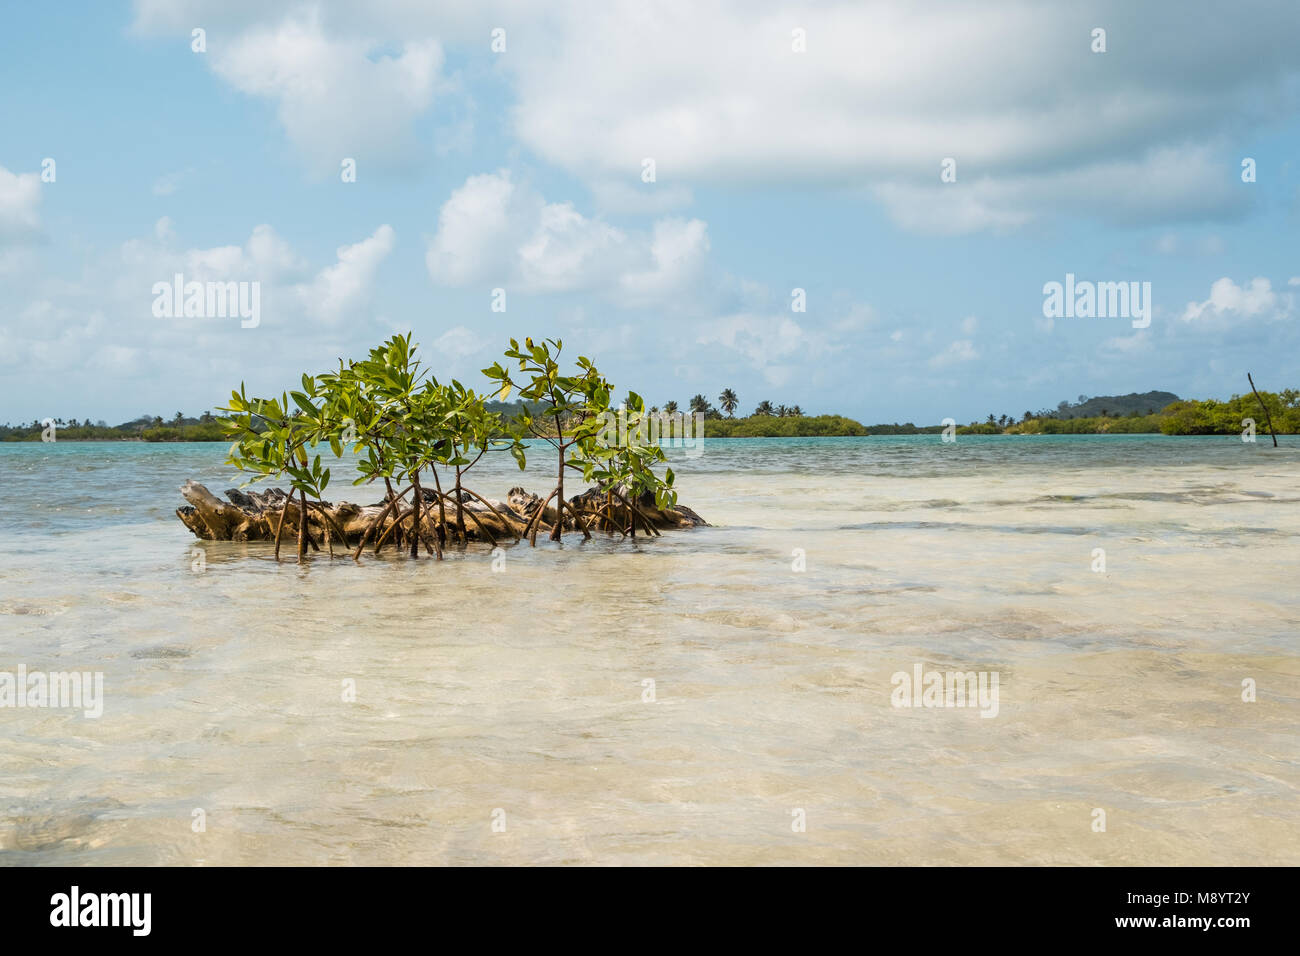 Island coast with mangrove trees and palm trees - Stock Photo